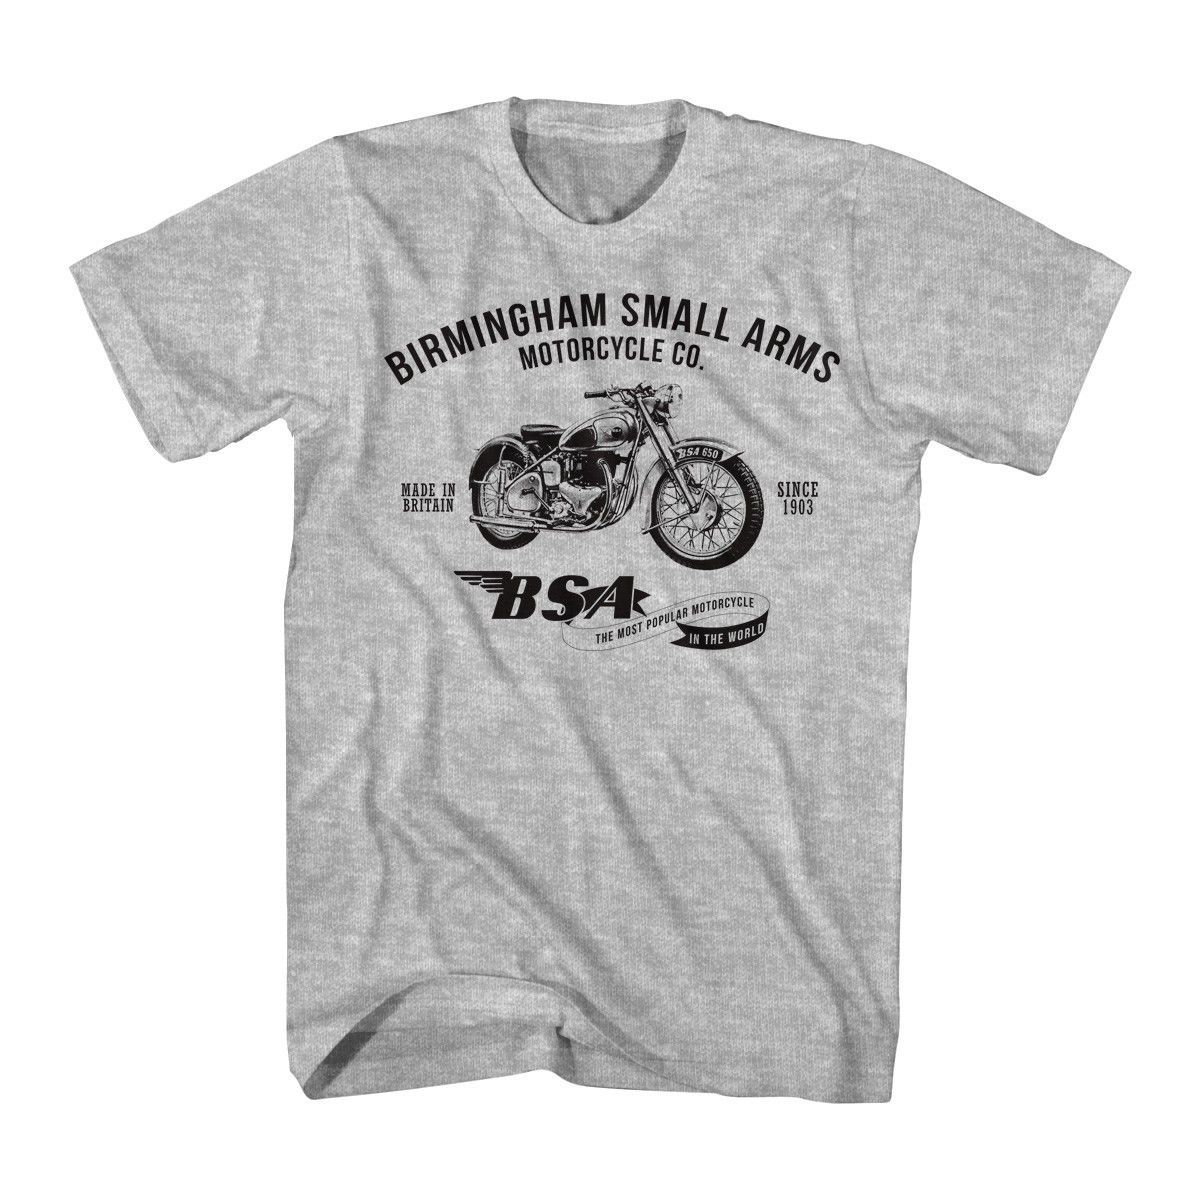 BSA Motorcycle Co Made In Britian Since 1903 Adult T Shirt BSA 650